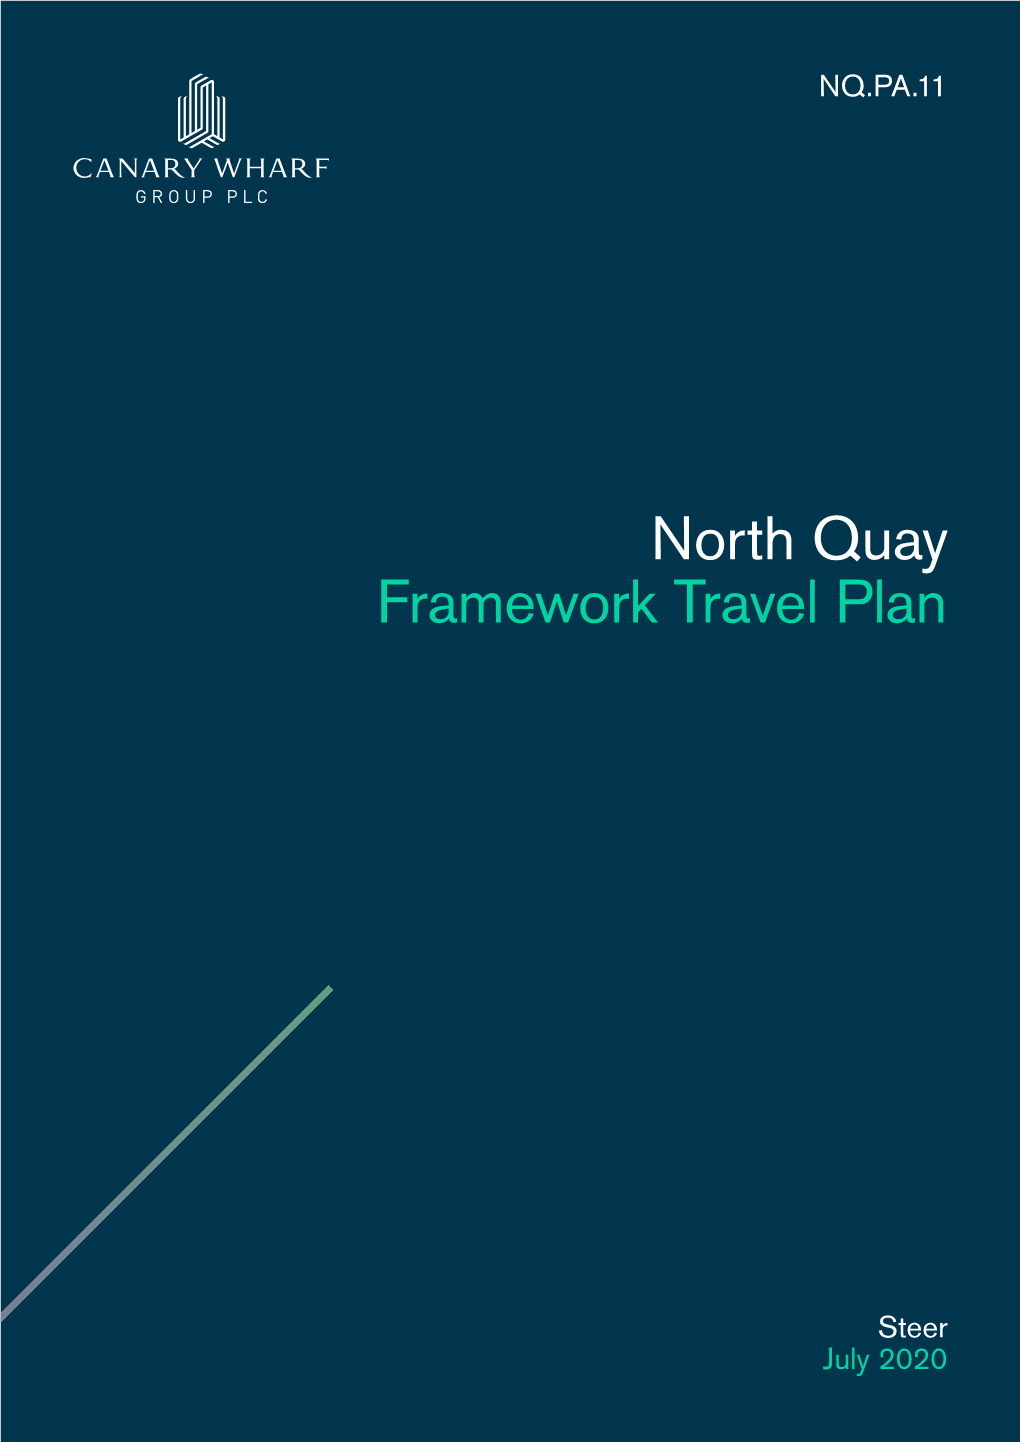 NQ.PA.11.Framework Travel Plan – July 2020